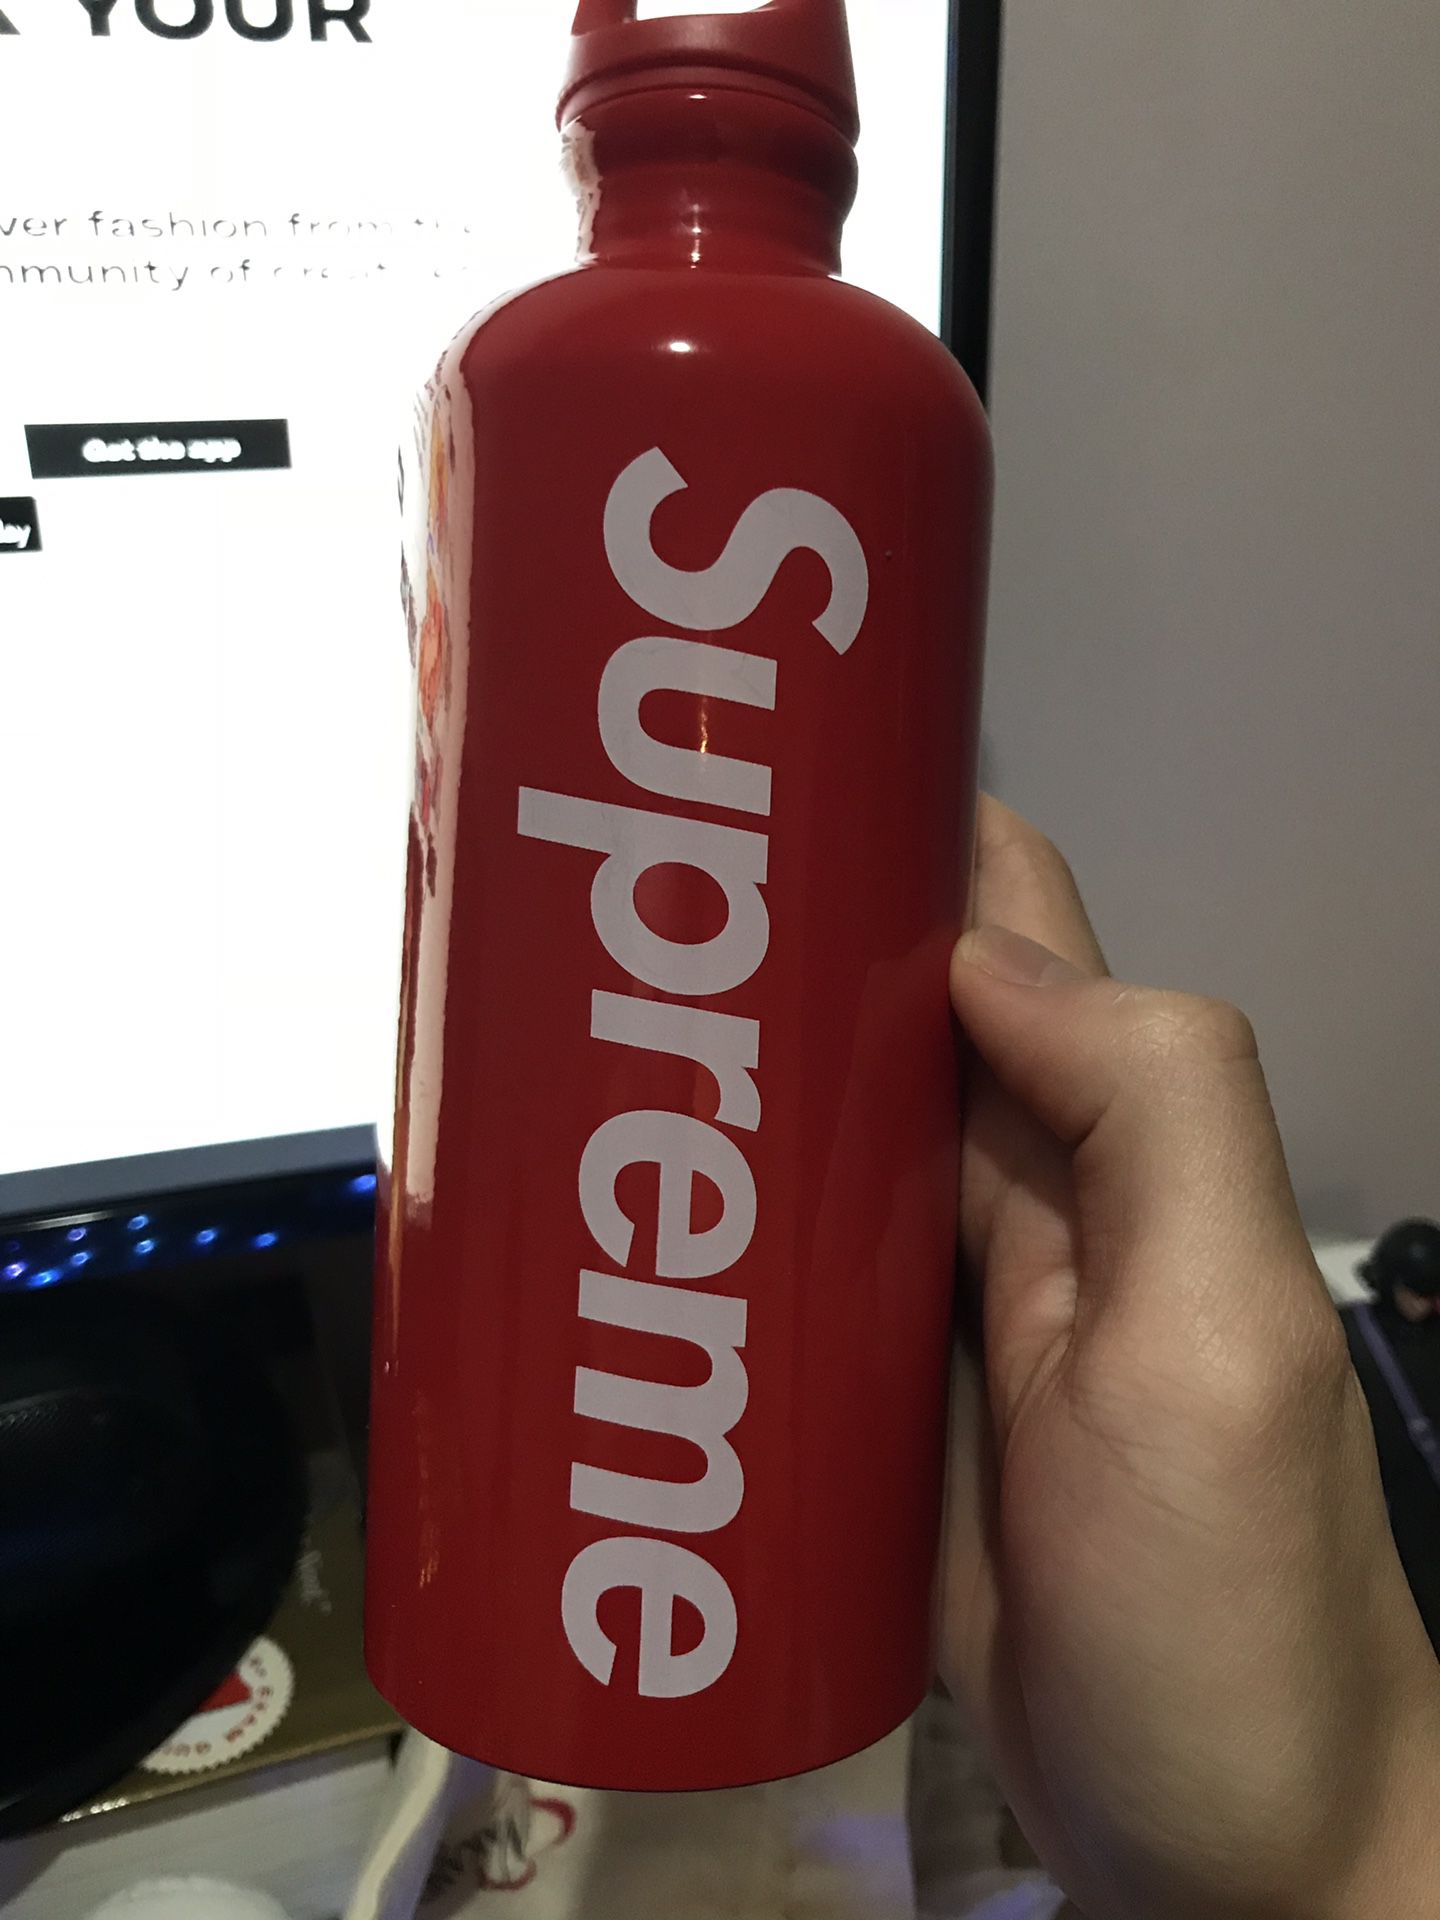 supreme water bottle